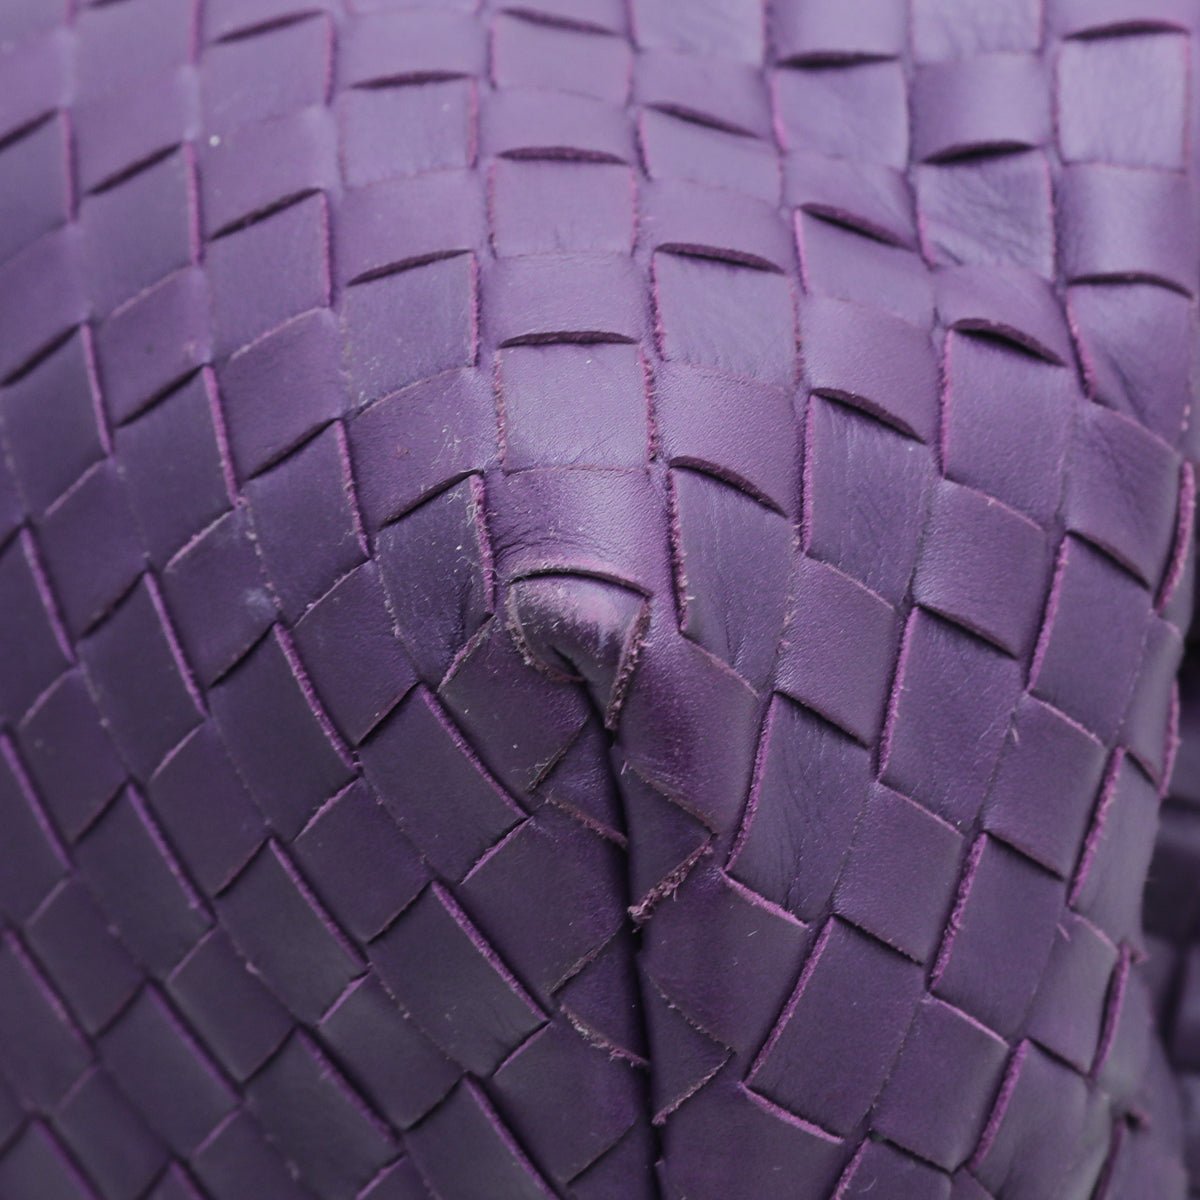 Bottega Veneta - Bottega Veneta Purple Intrecciato Bag | The Closet